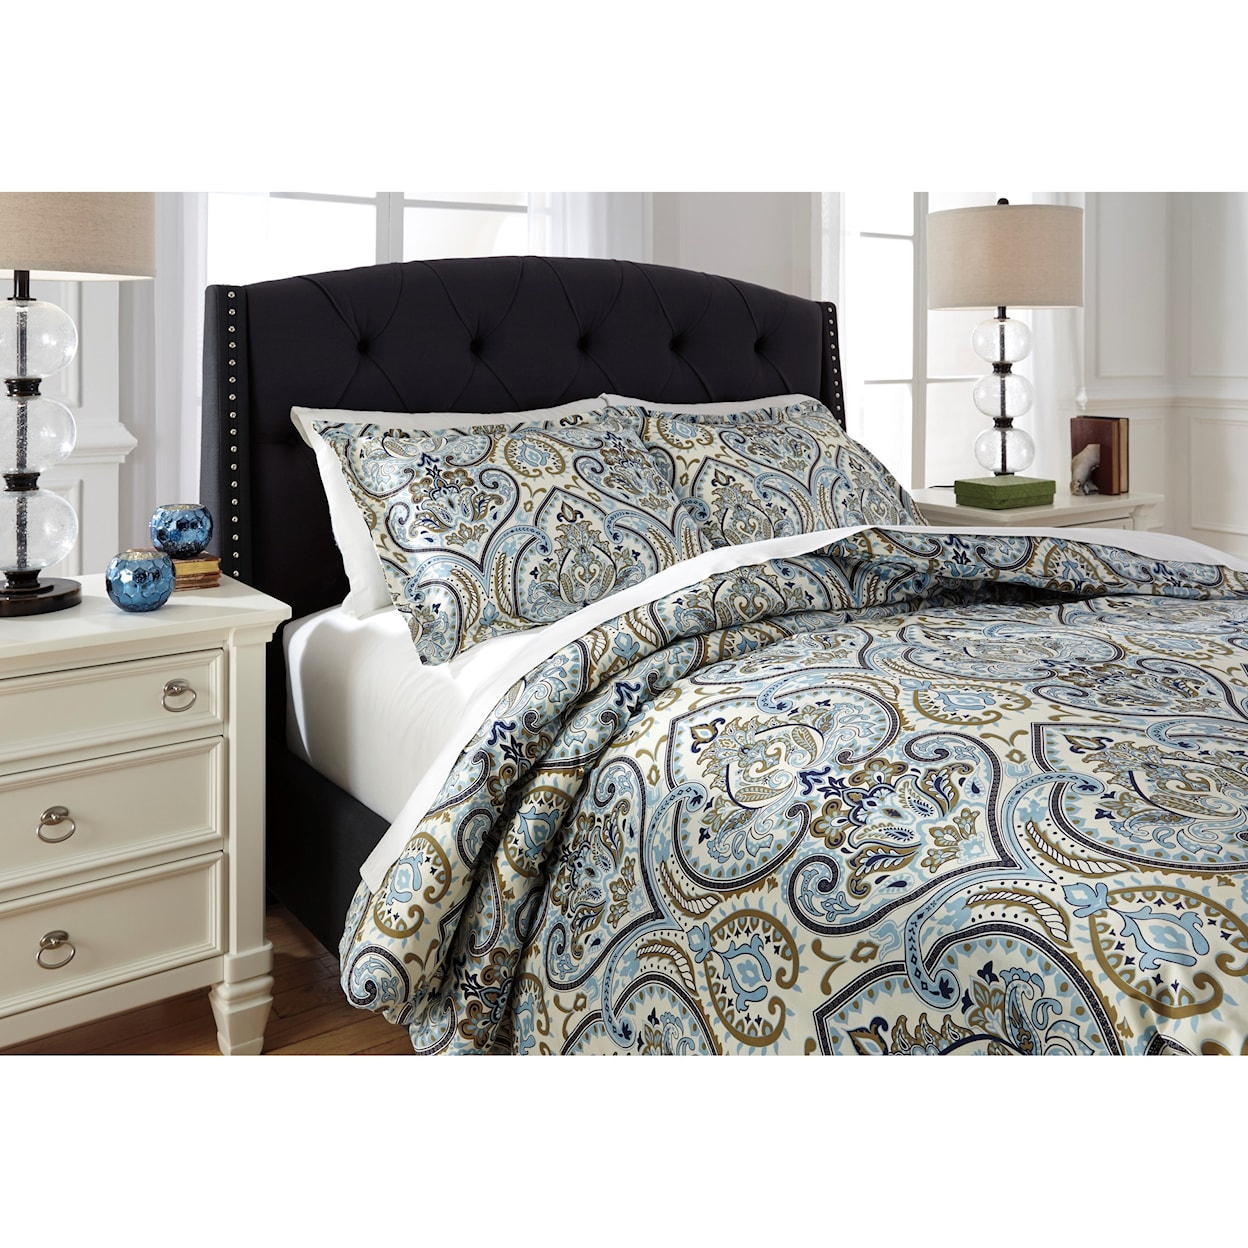 Ashley Furniture Signature Design Bedding Sets Queen Soliel Multi Duvet Cover Set